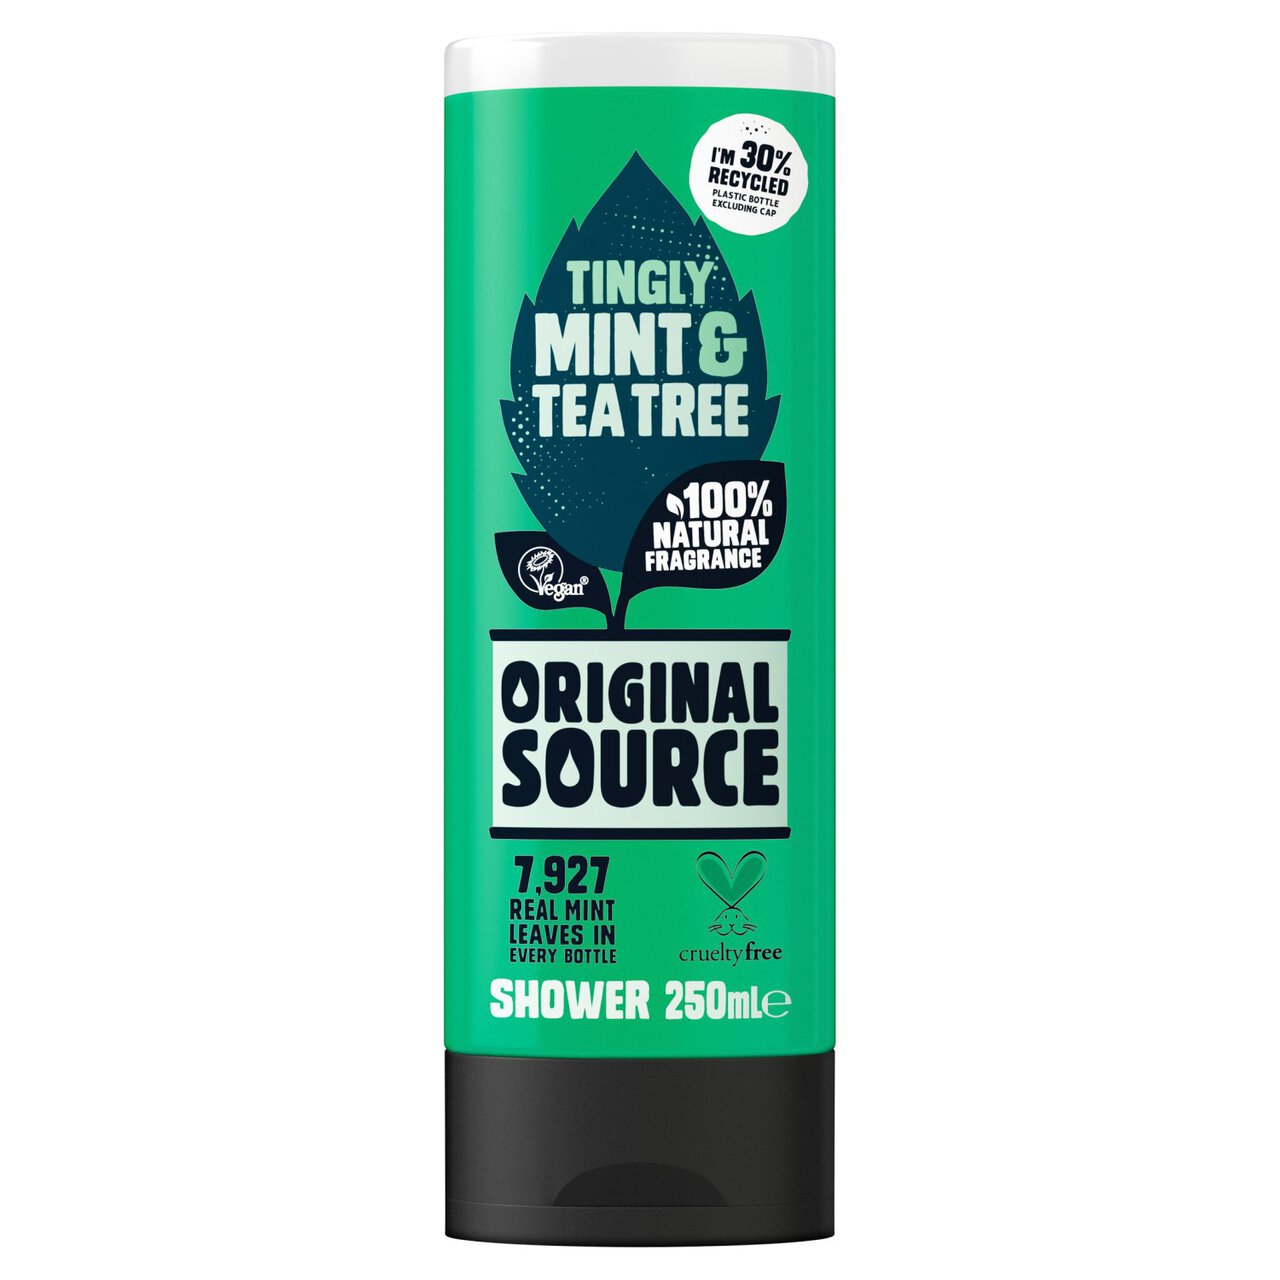 Original Source Mint and Tea Tree Shower Gel 250ml